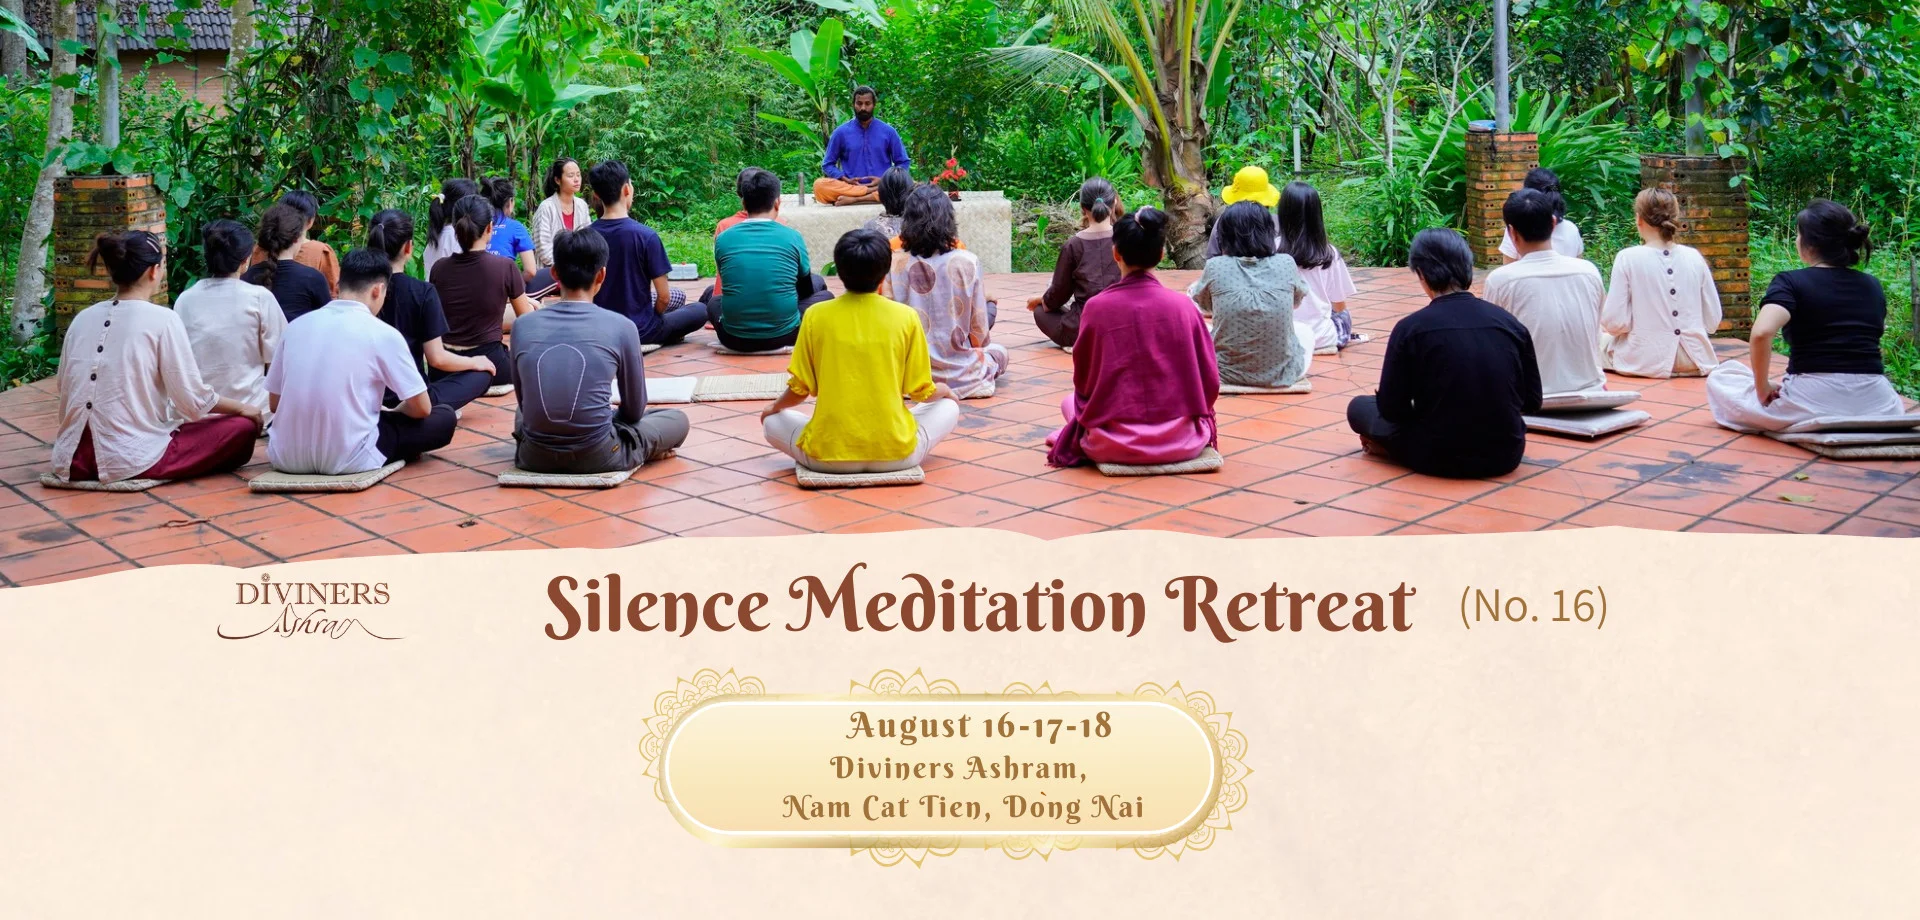 Silent Meditation Retreat No 16